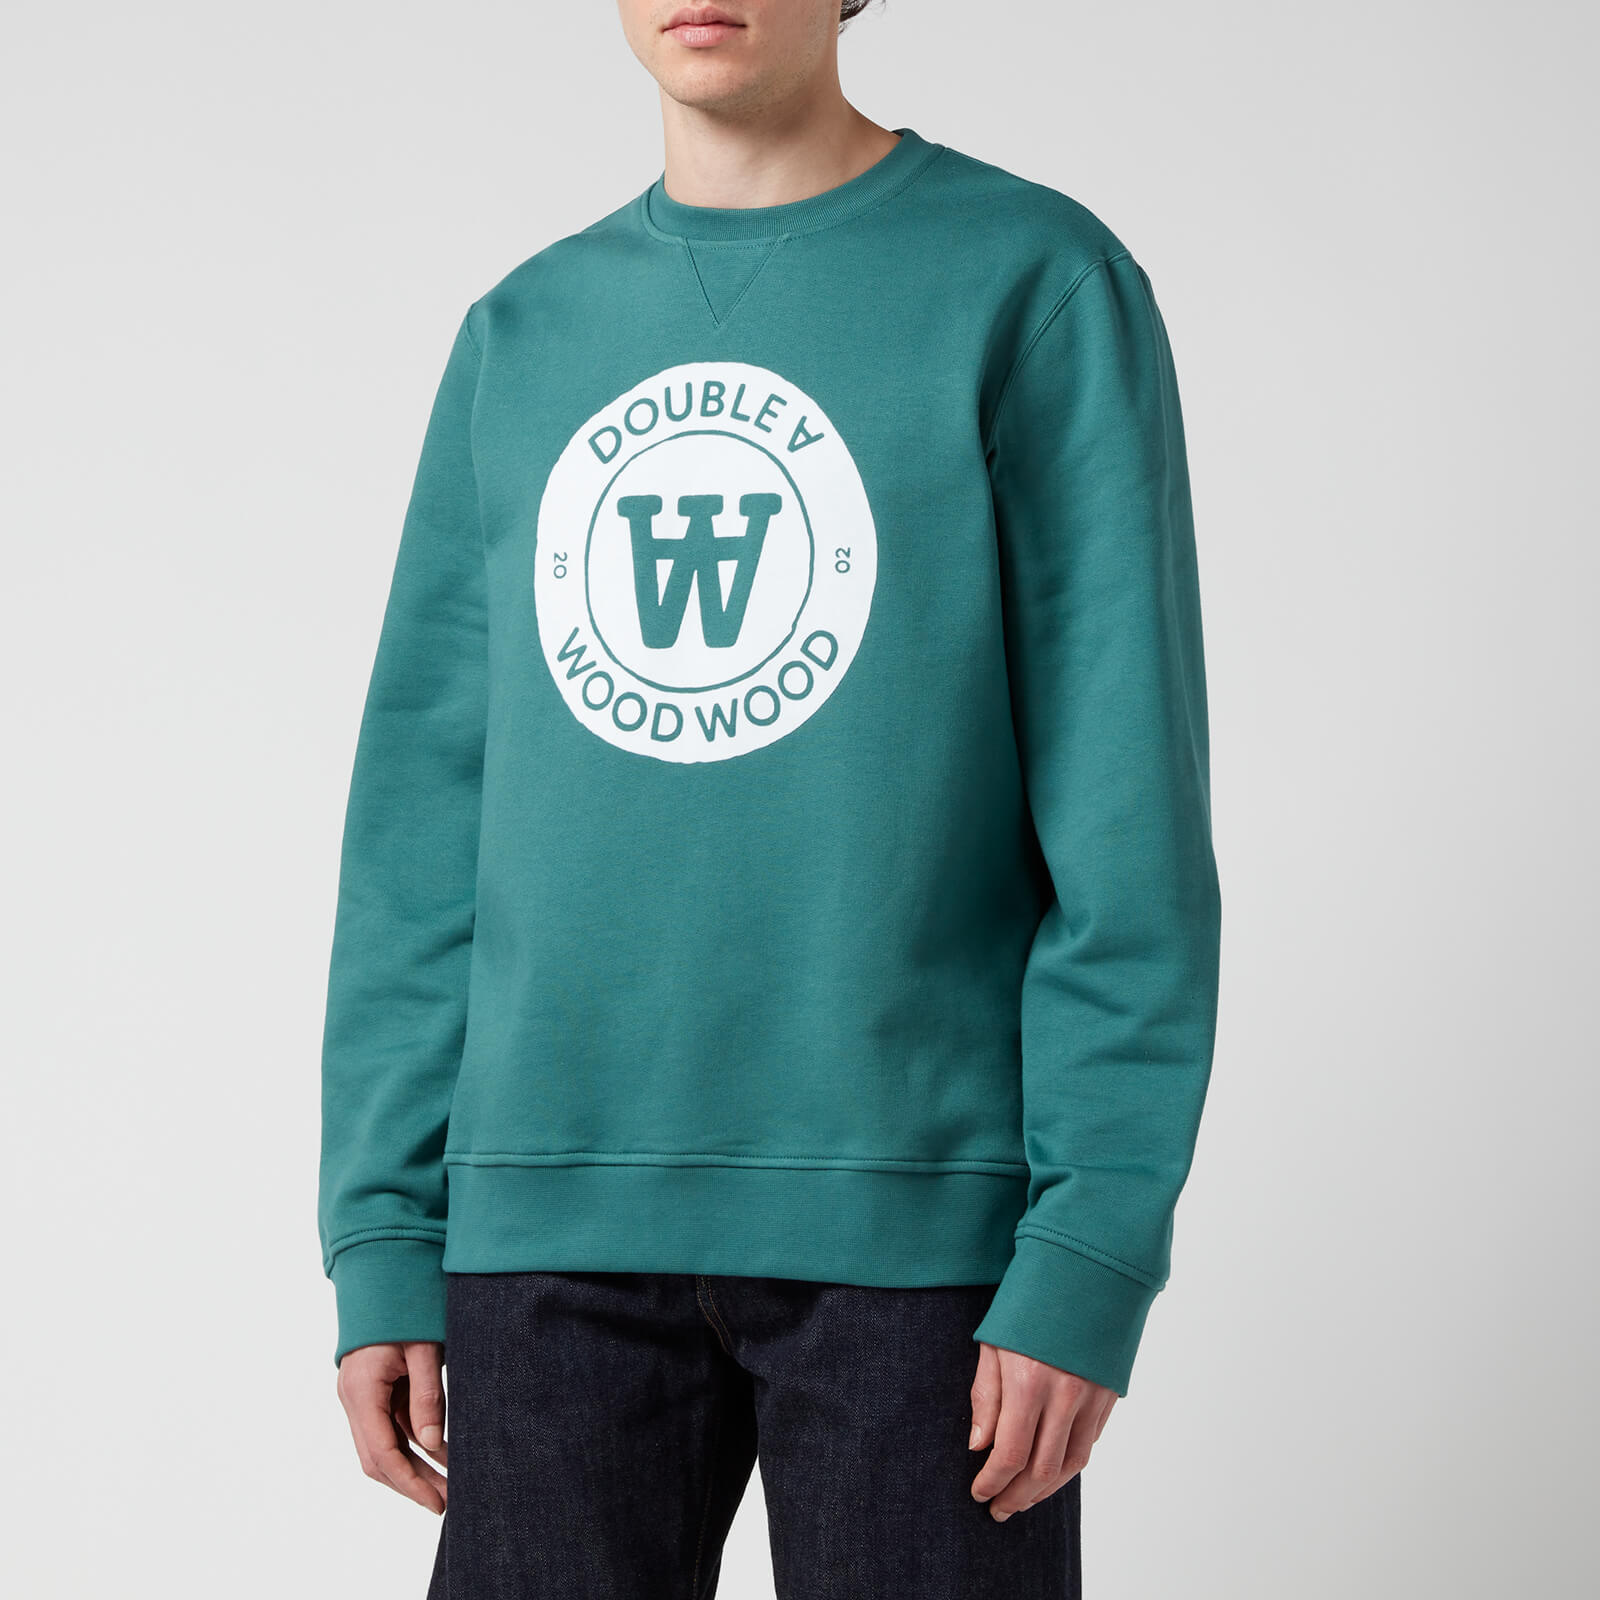 Wood Wood Men's Tye Crest Pullover Sweatshirt - Sea Green - M